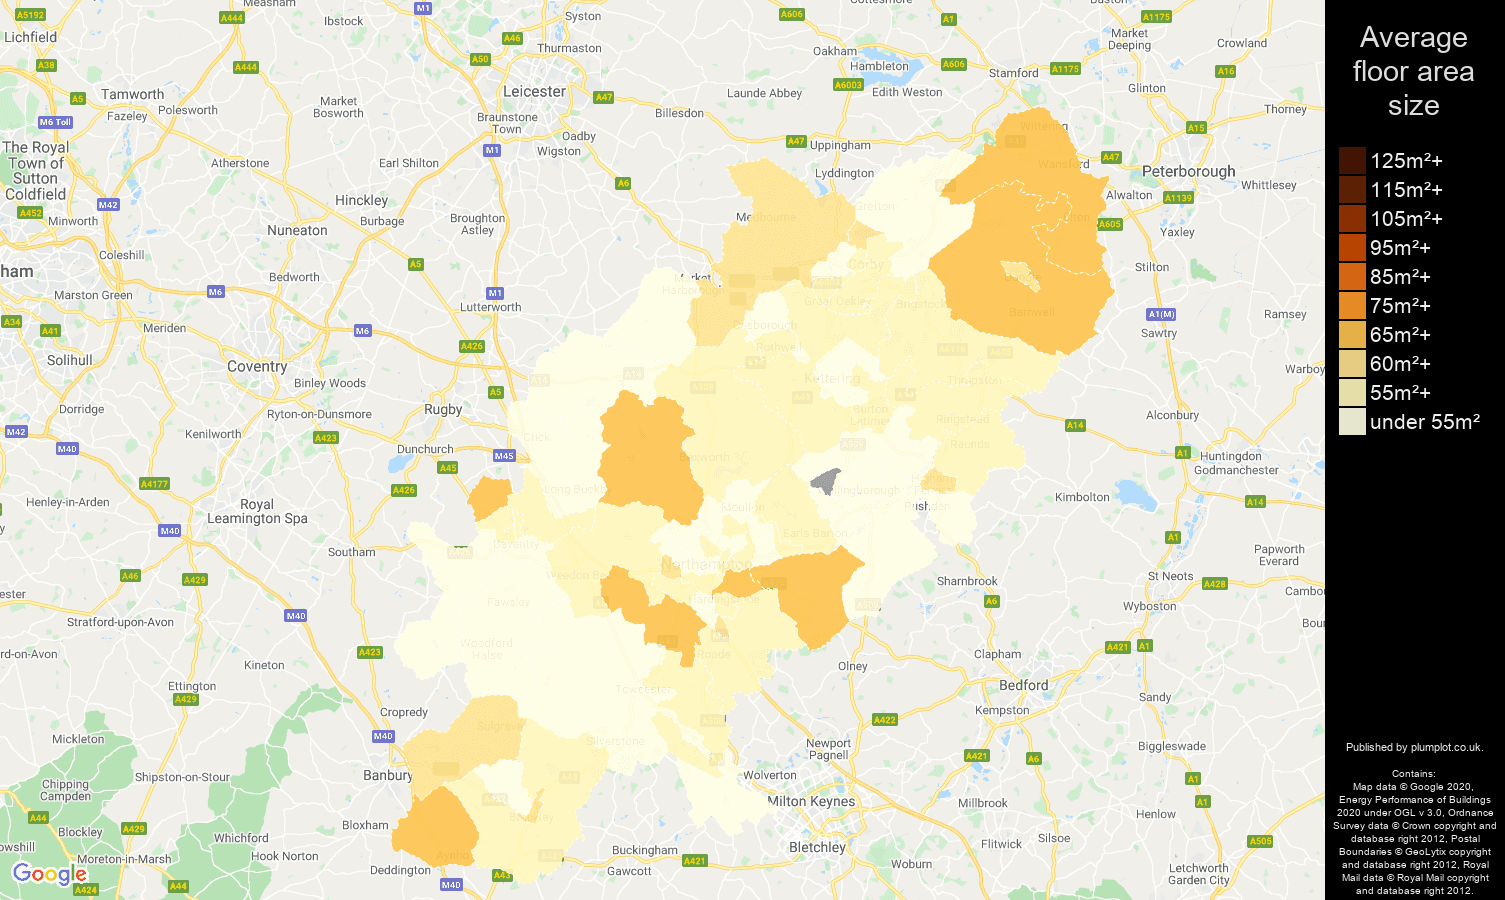 Northamptonshire map of average floor area size of flats